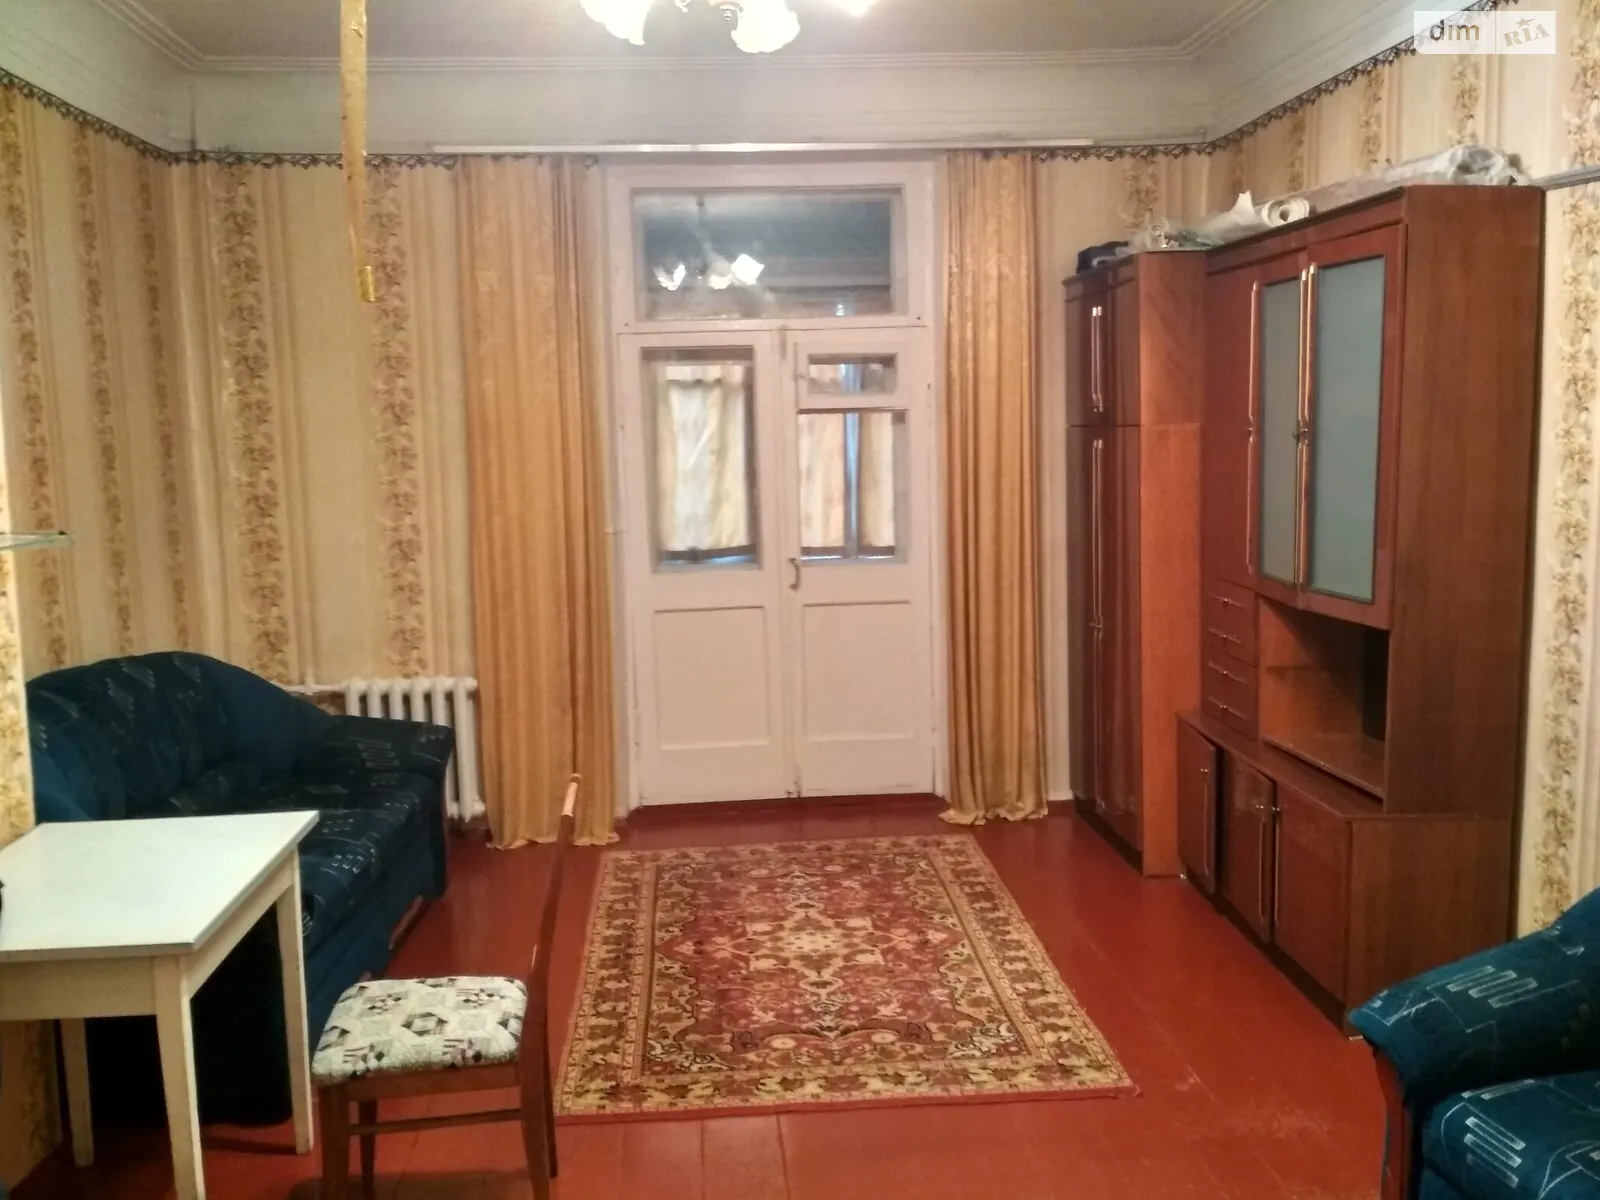 Сдается в аренду комната 20 кв. м в Киеве, цена: 6500 грн - фото 1